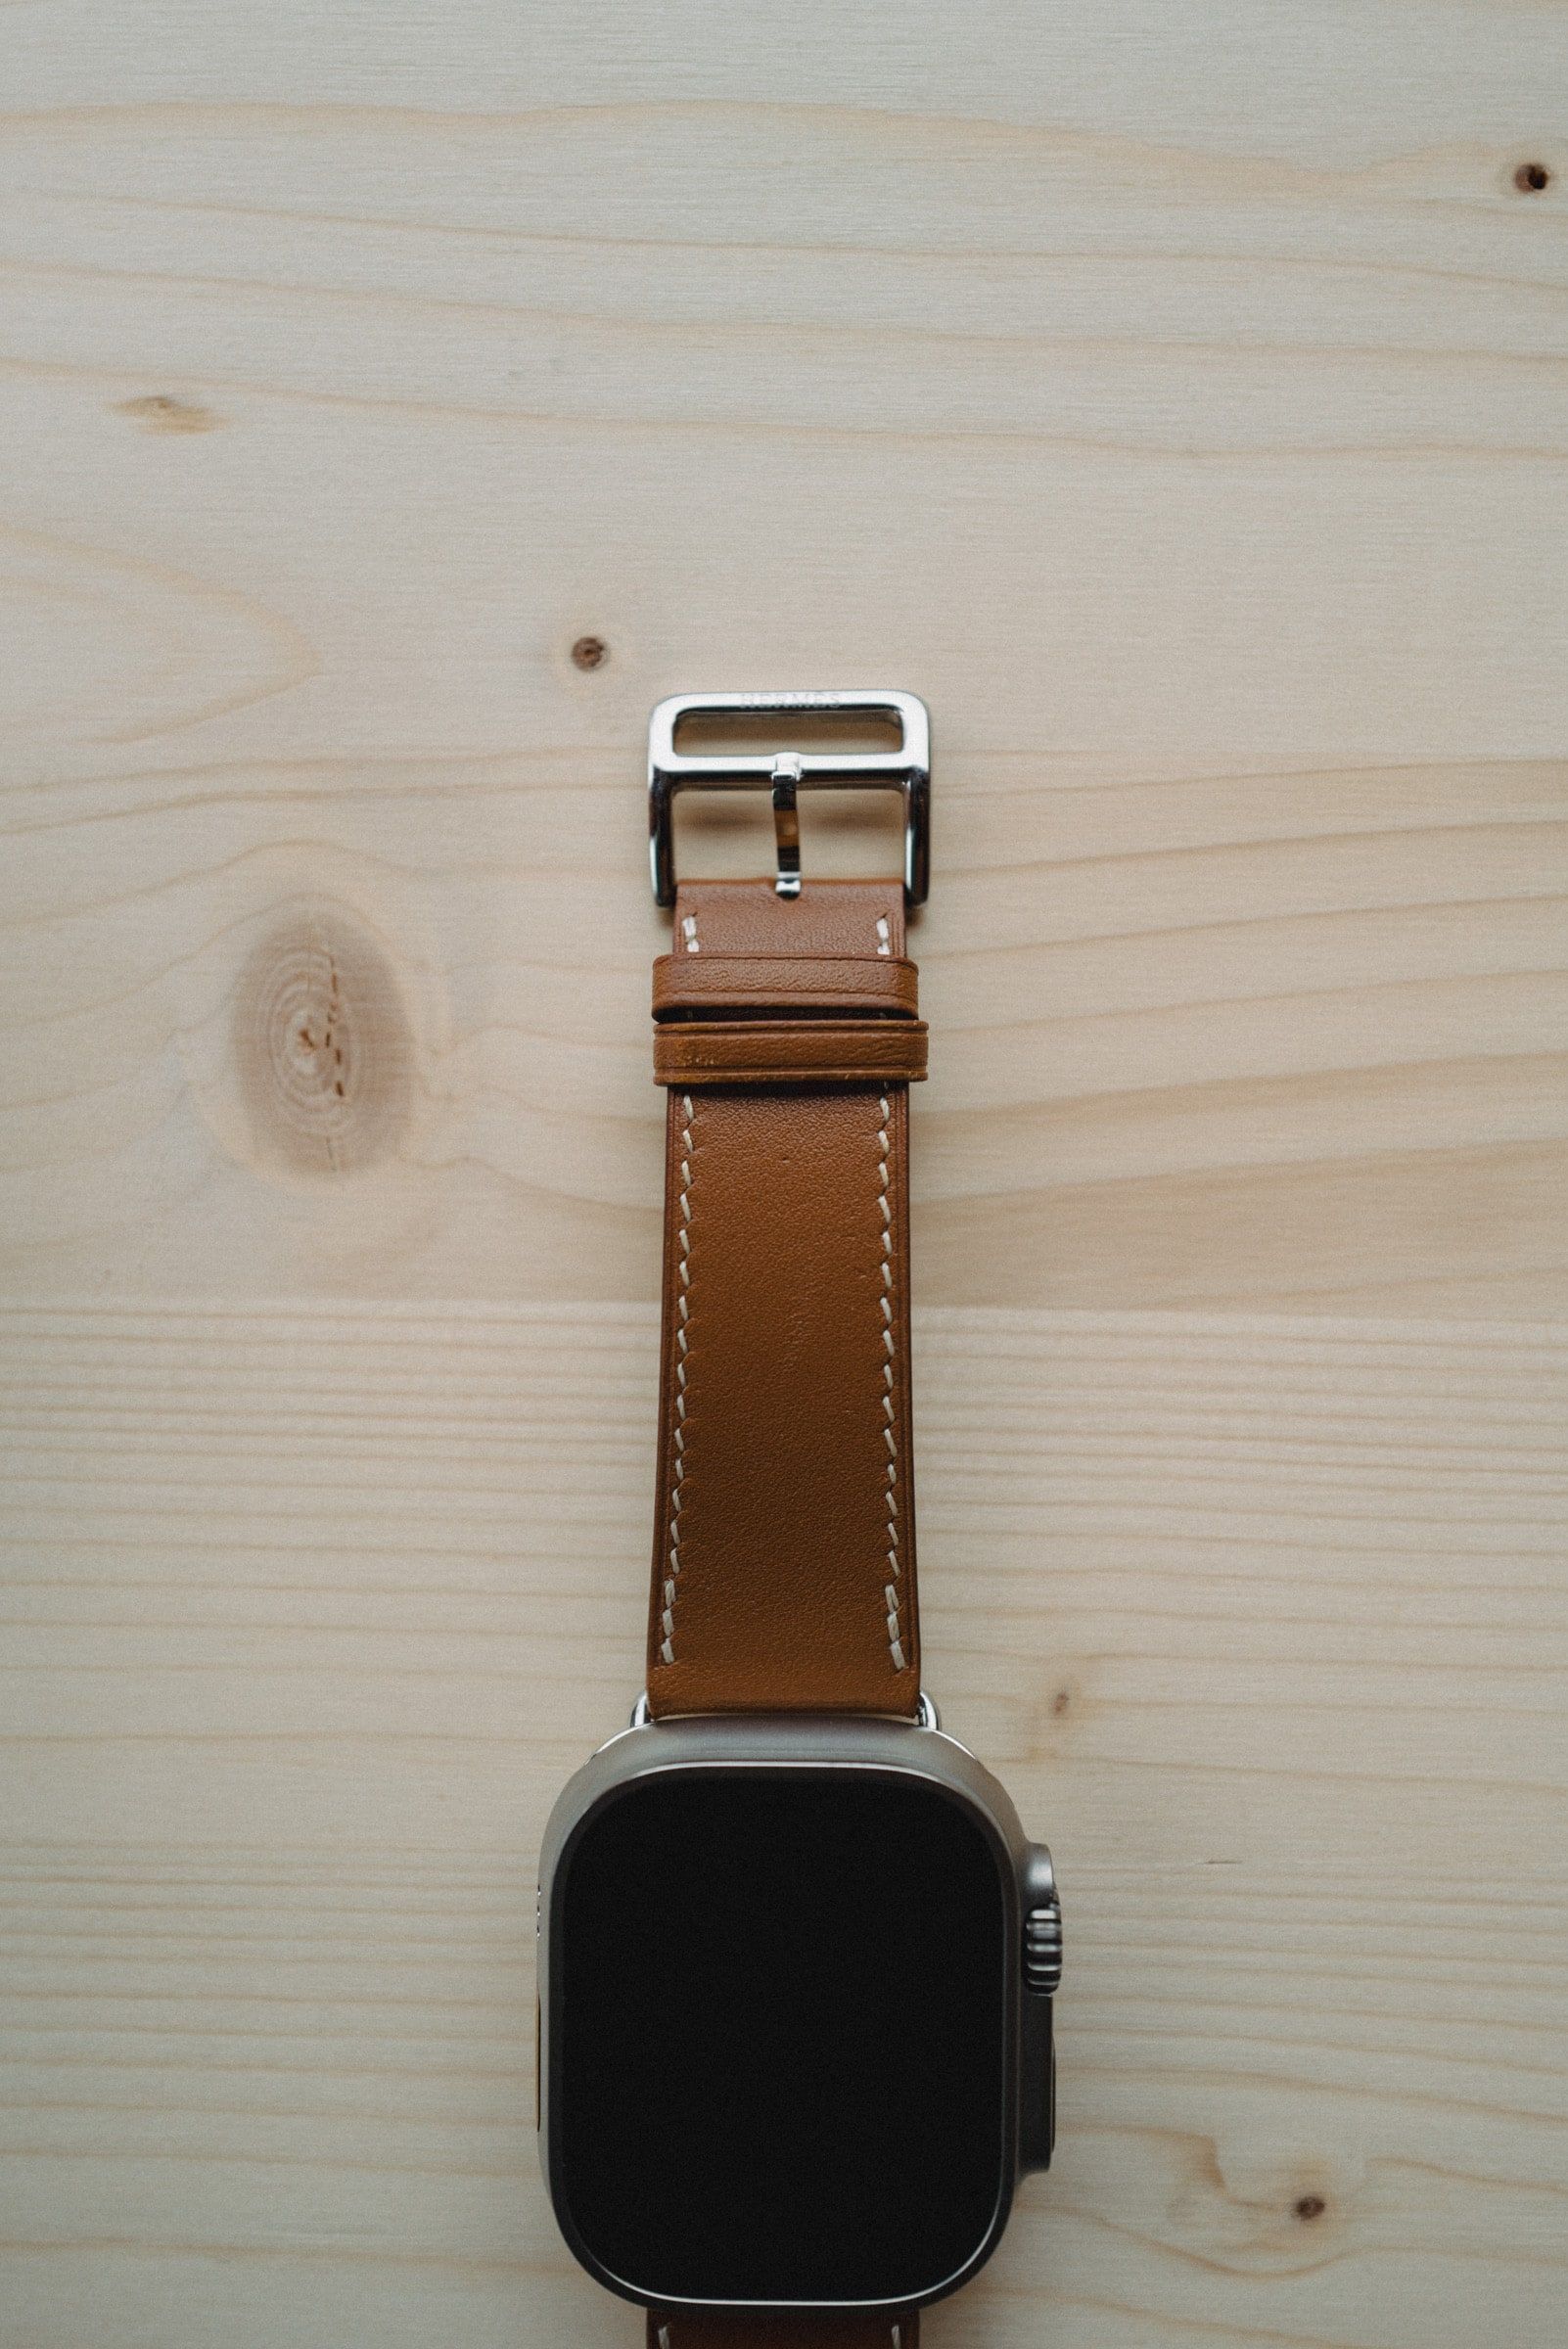 The Infinity Loop Honeymoon Suite Apple Watch Leather Band